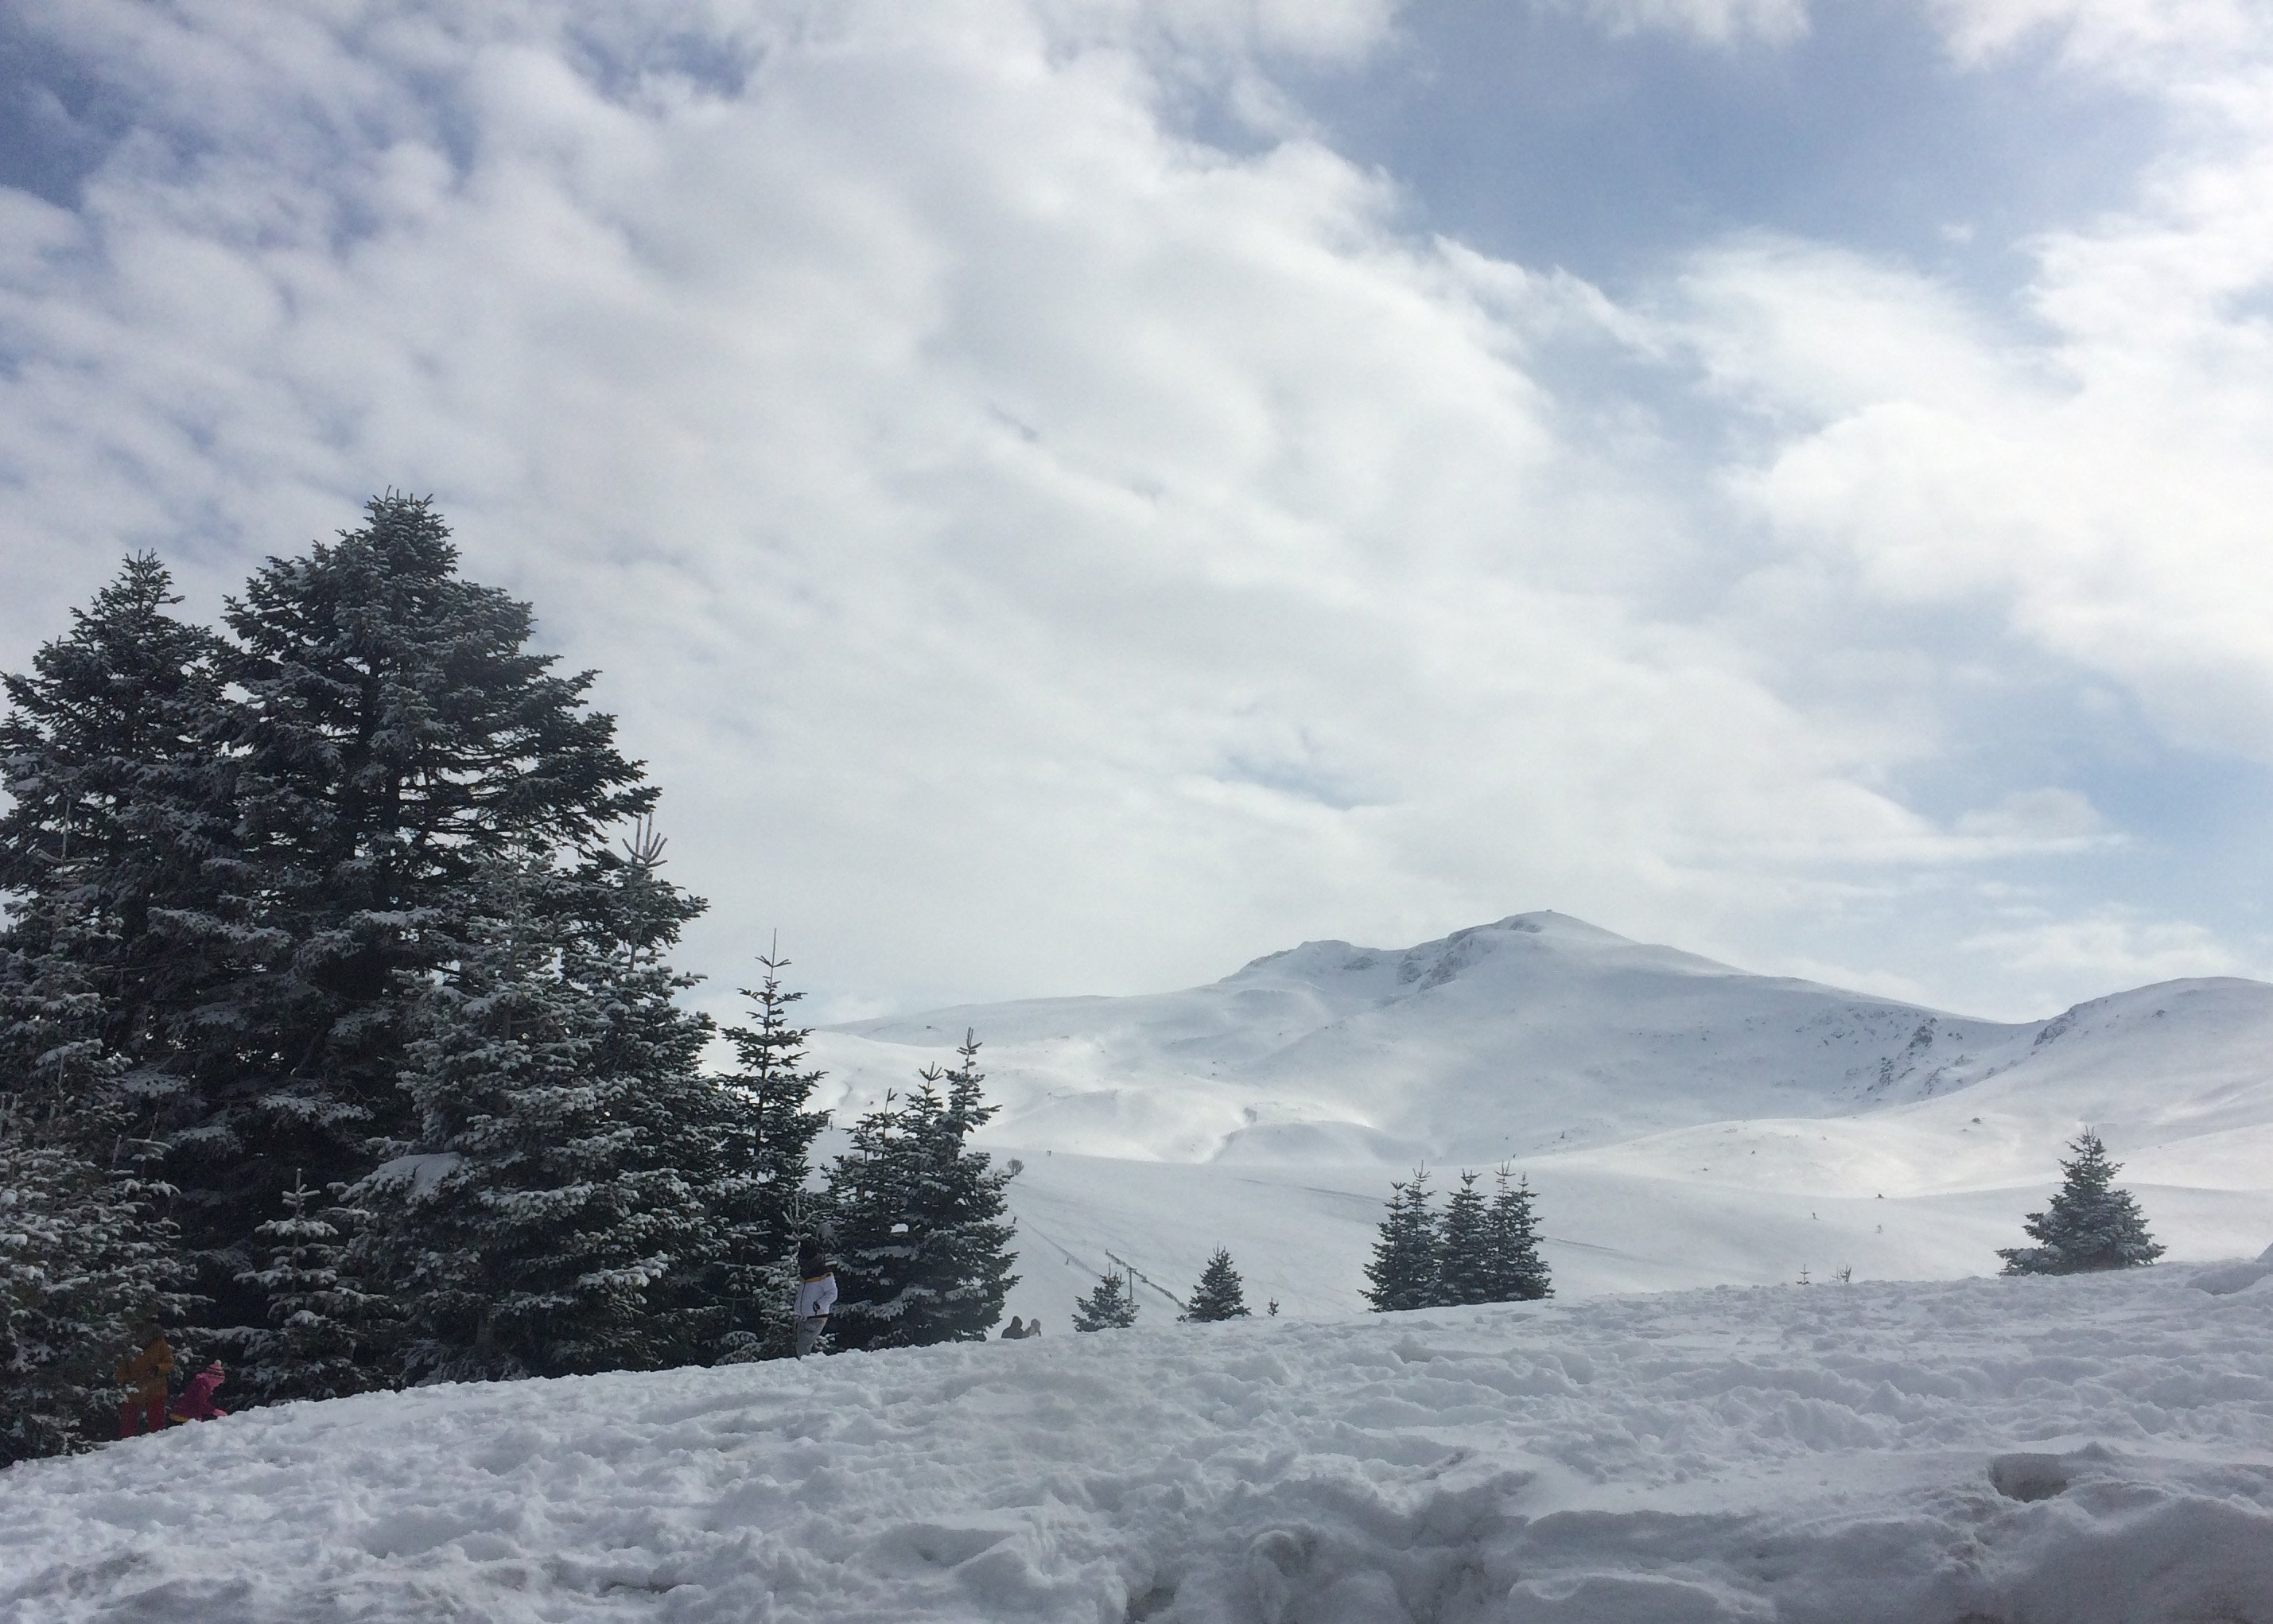 Snow drifts and pine trees are seen near the ski slopes of Mount Uludağ, Bursa, northwestern Turkey, Feb. 22, 2020. (Gabriela Akpaça / Daily Sabah)